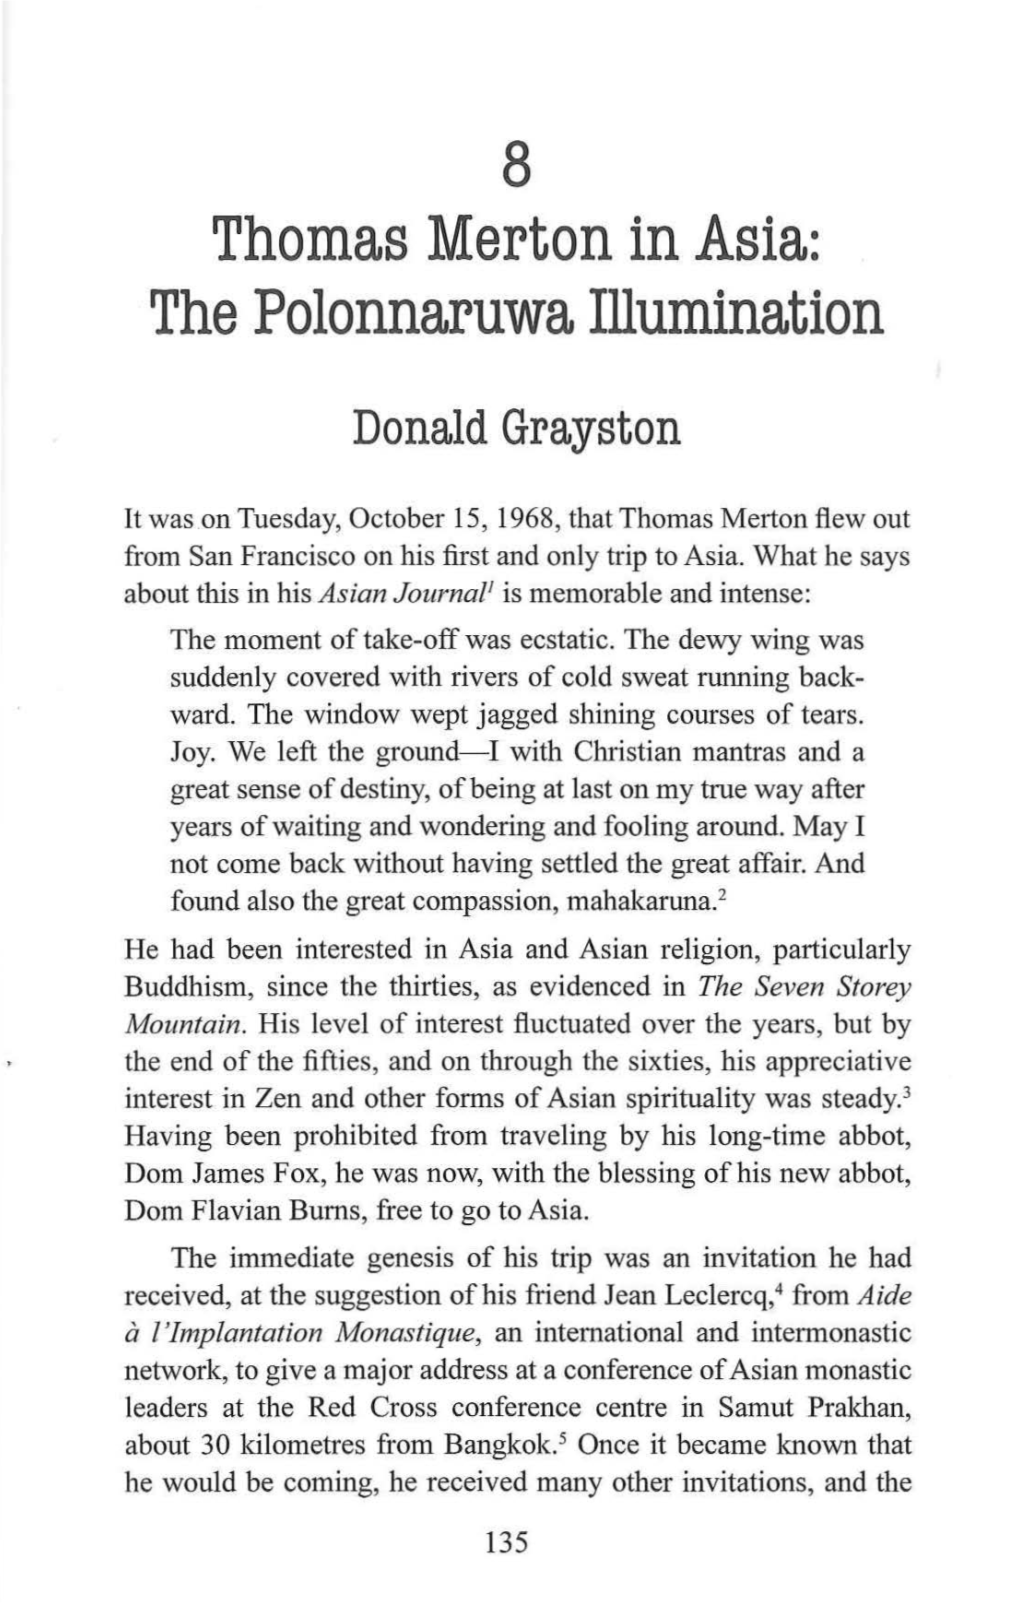 Thomas Merton in Asia: the Polonnaruwa Illumination